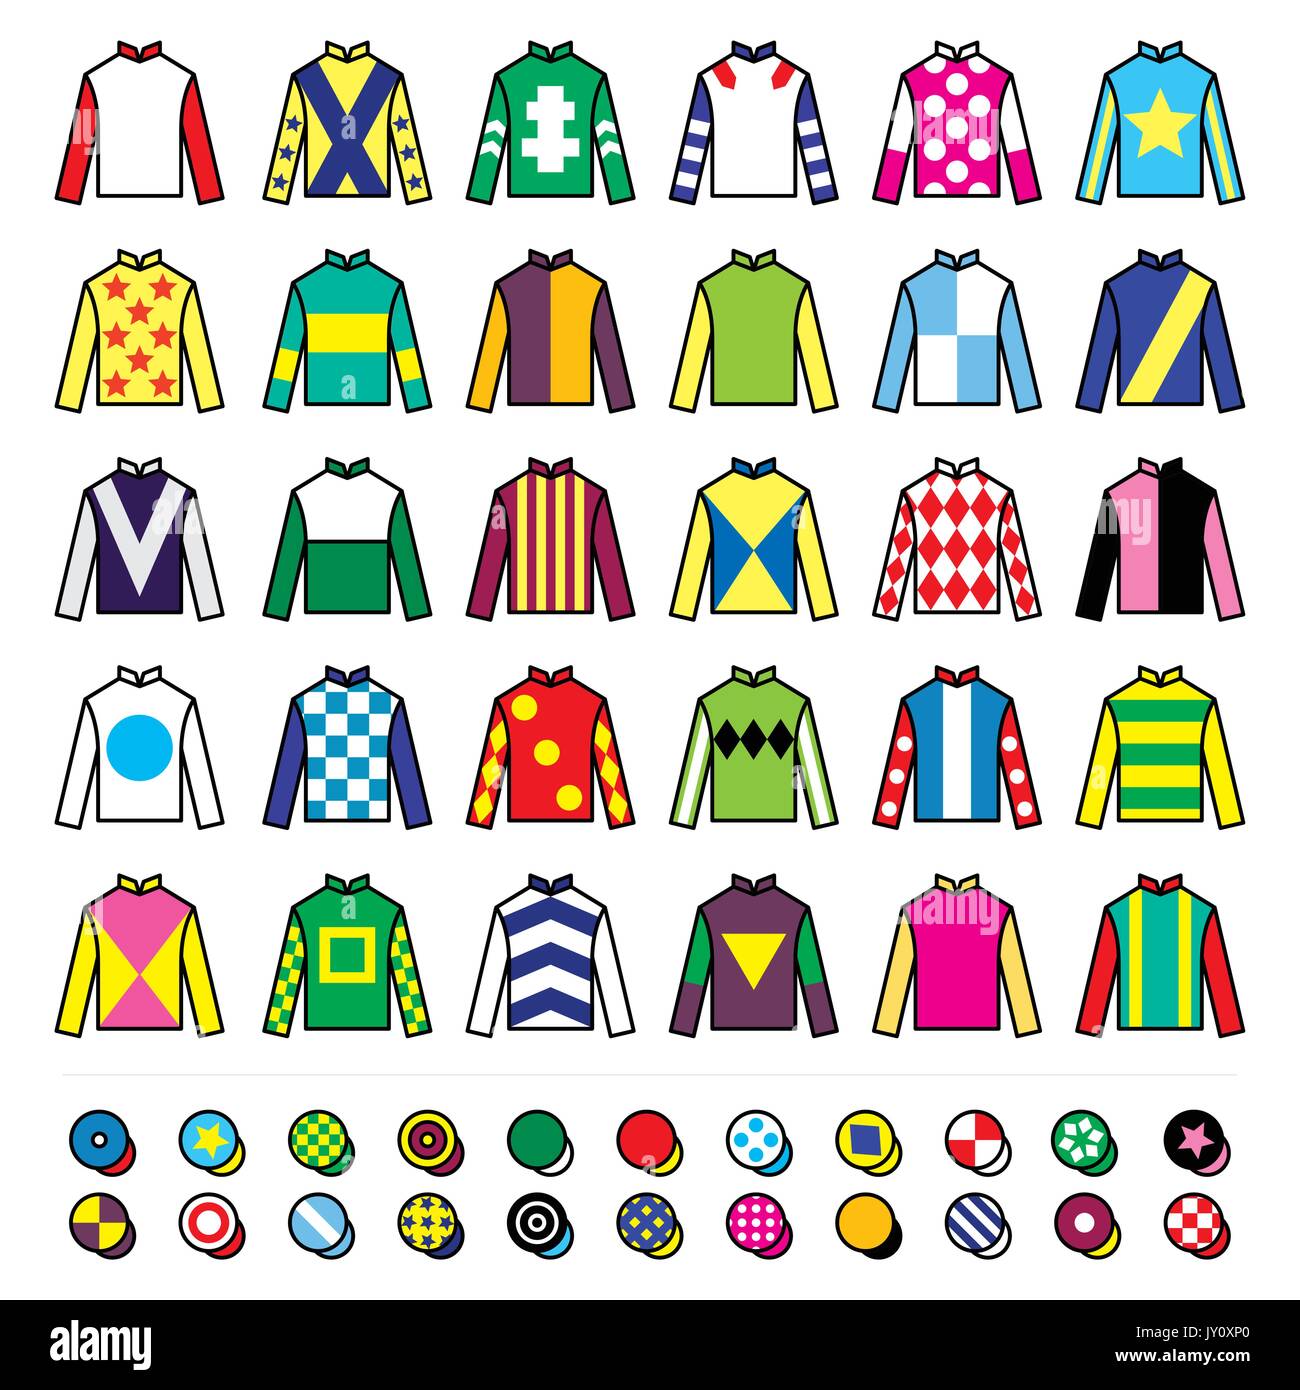 Jockey uniform - jackets, silks and hats, horse riding icons set    Vector icons set - horse racing jockey uniform designs isolated on white Stock Vector